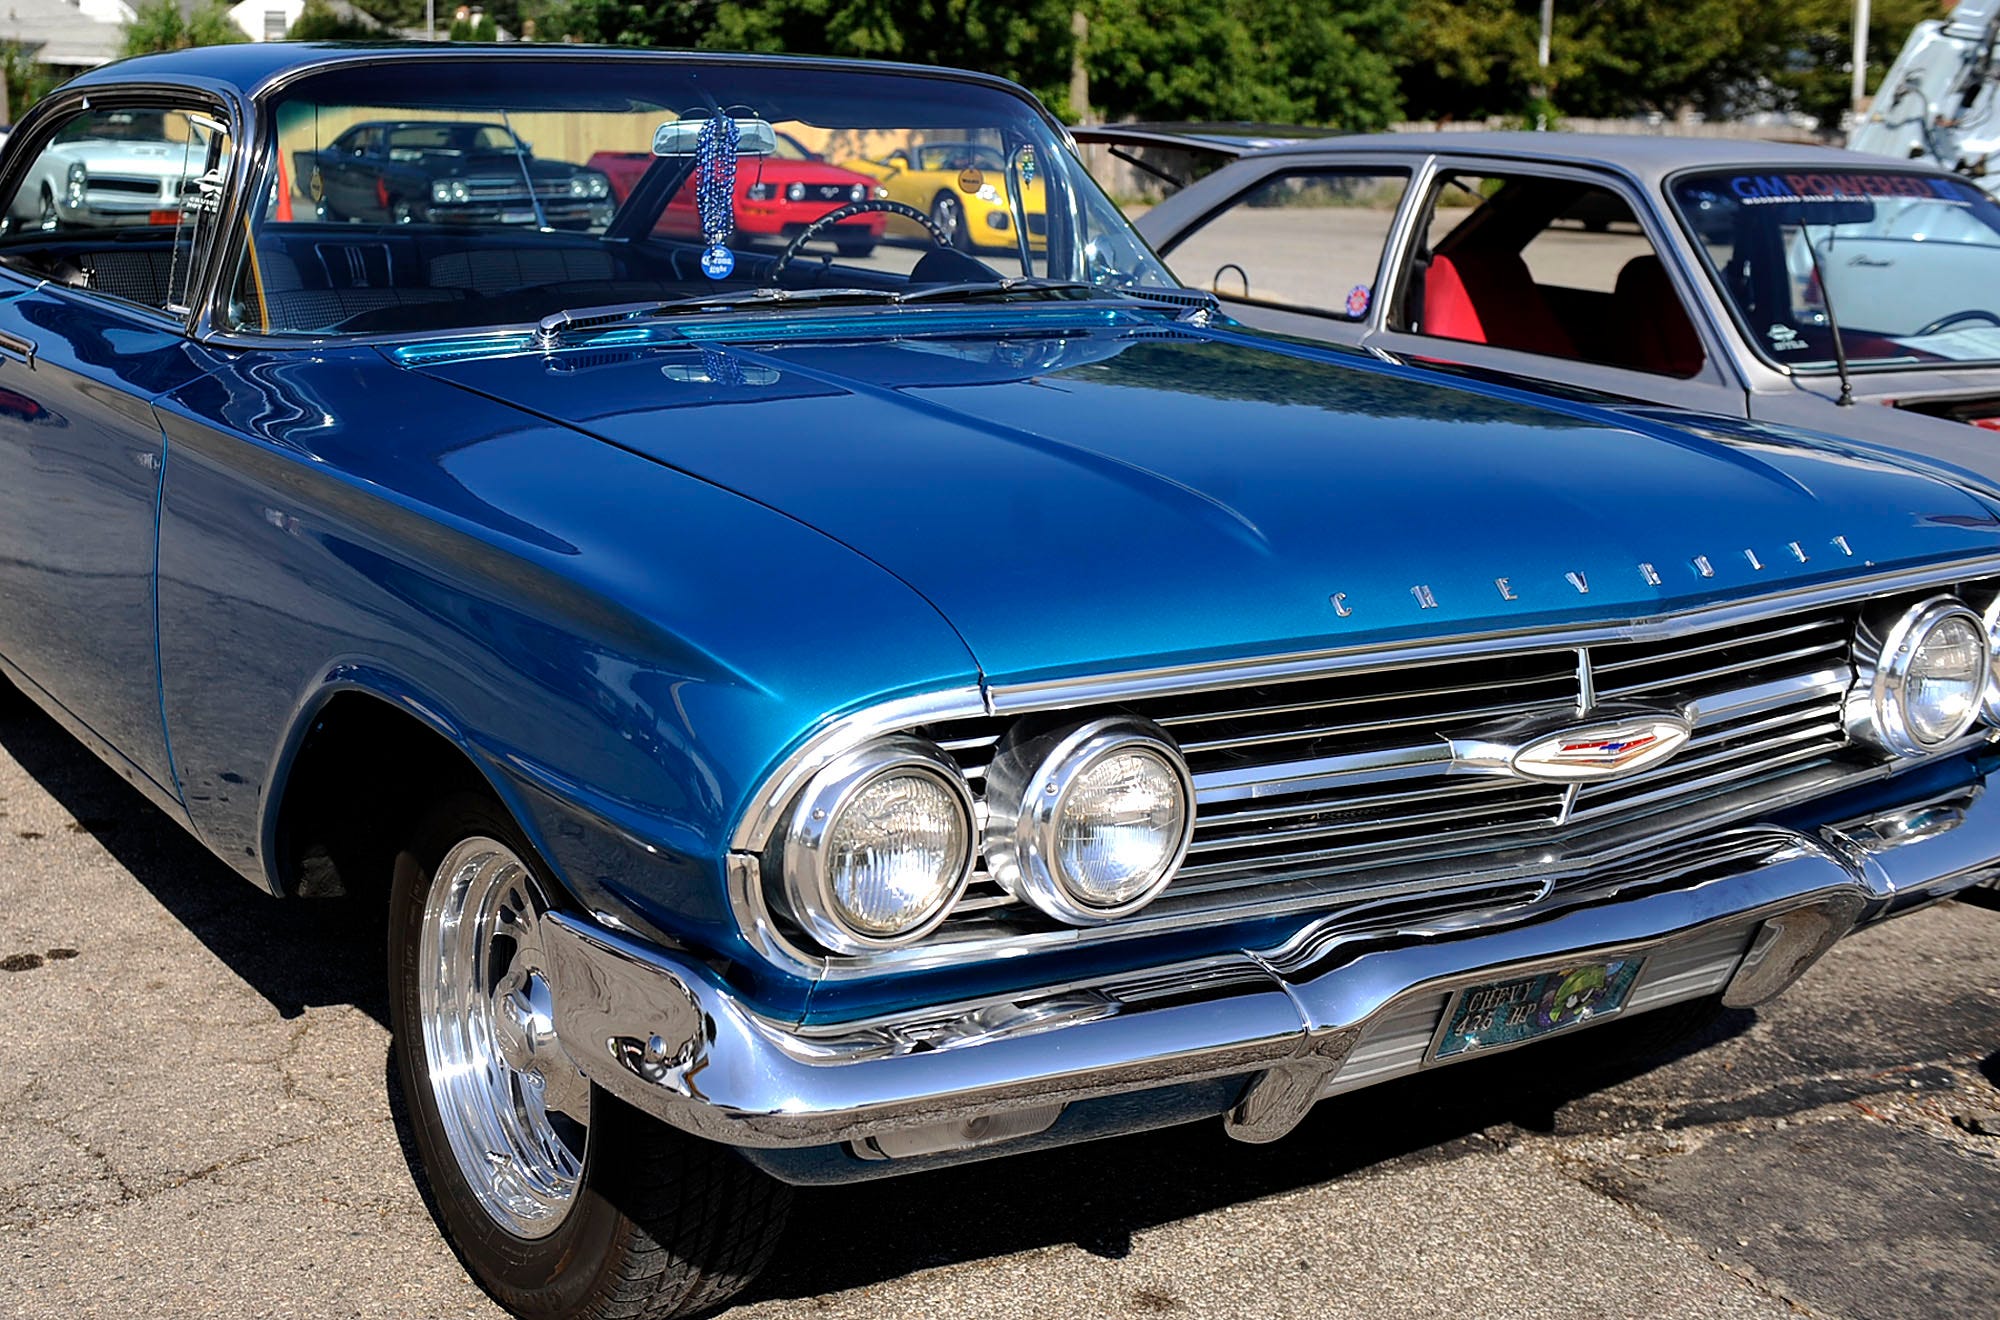 A 1960 Chevy Impala owned by Jay Harbin of Berkley.